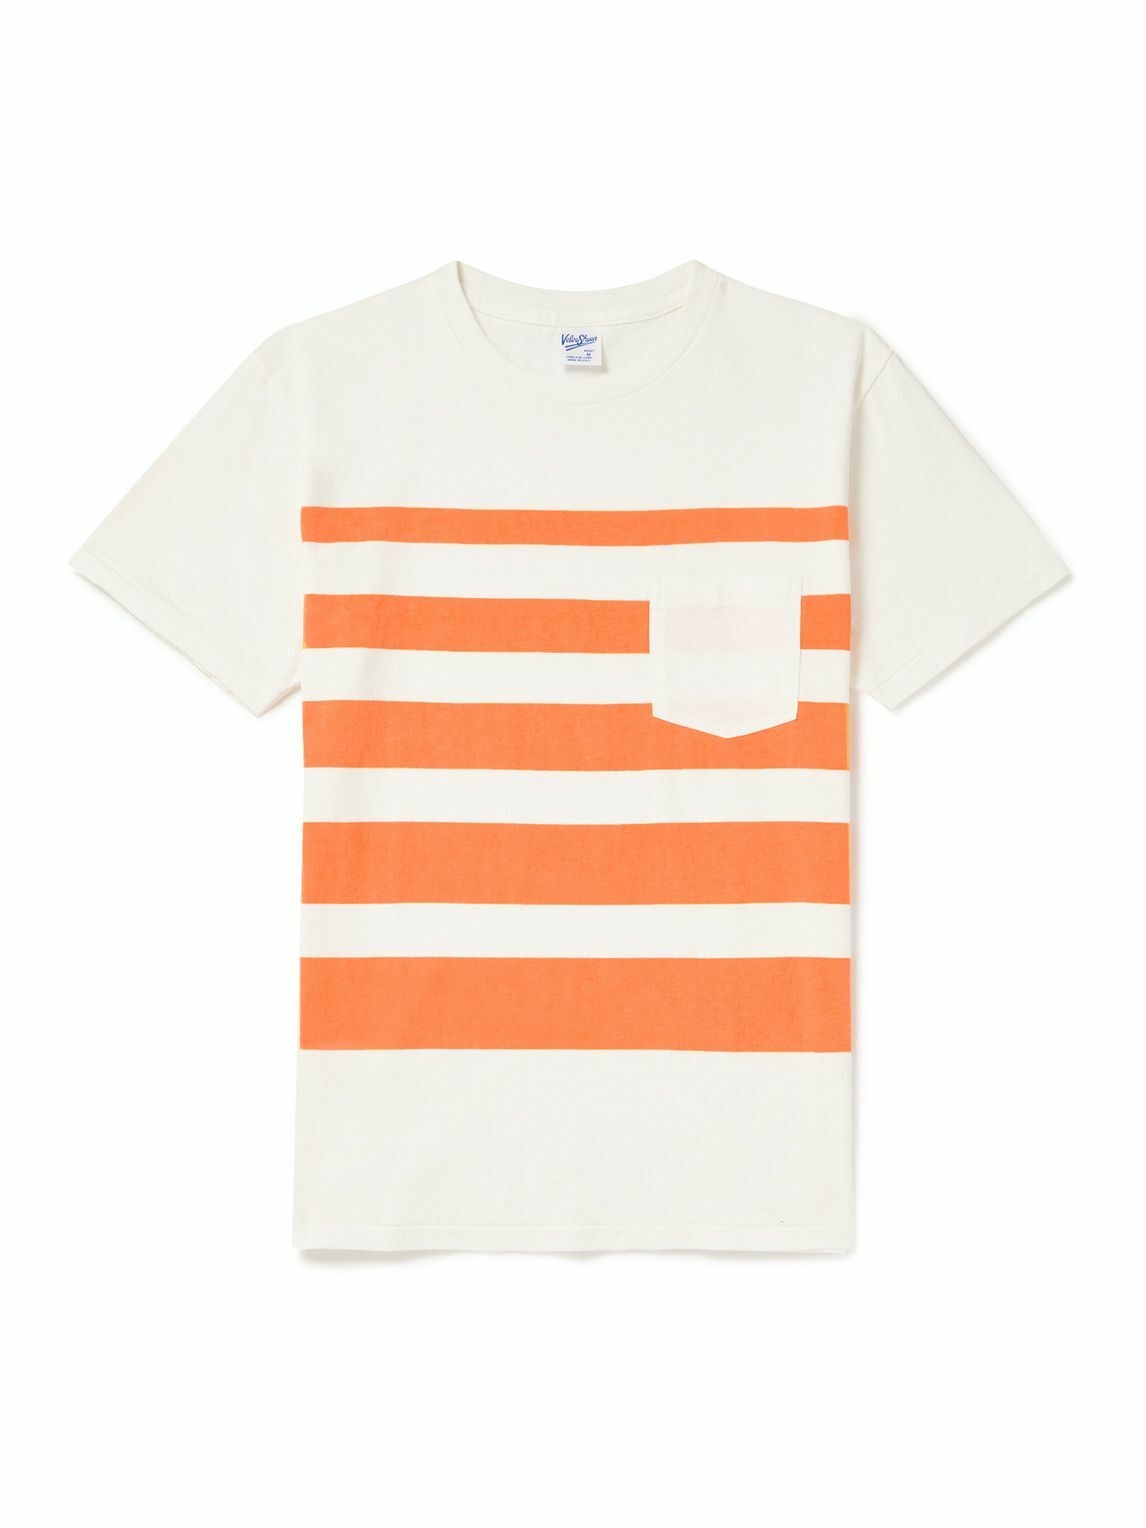 Photo: Velva Sheen - Wide Wave Striped Cotton-Jersey T-Shirt - White